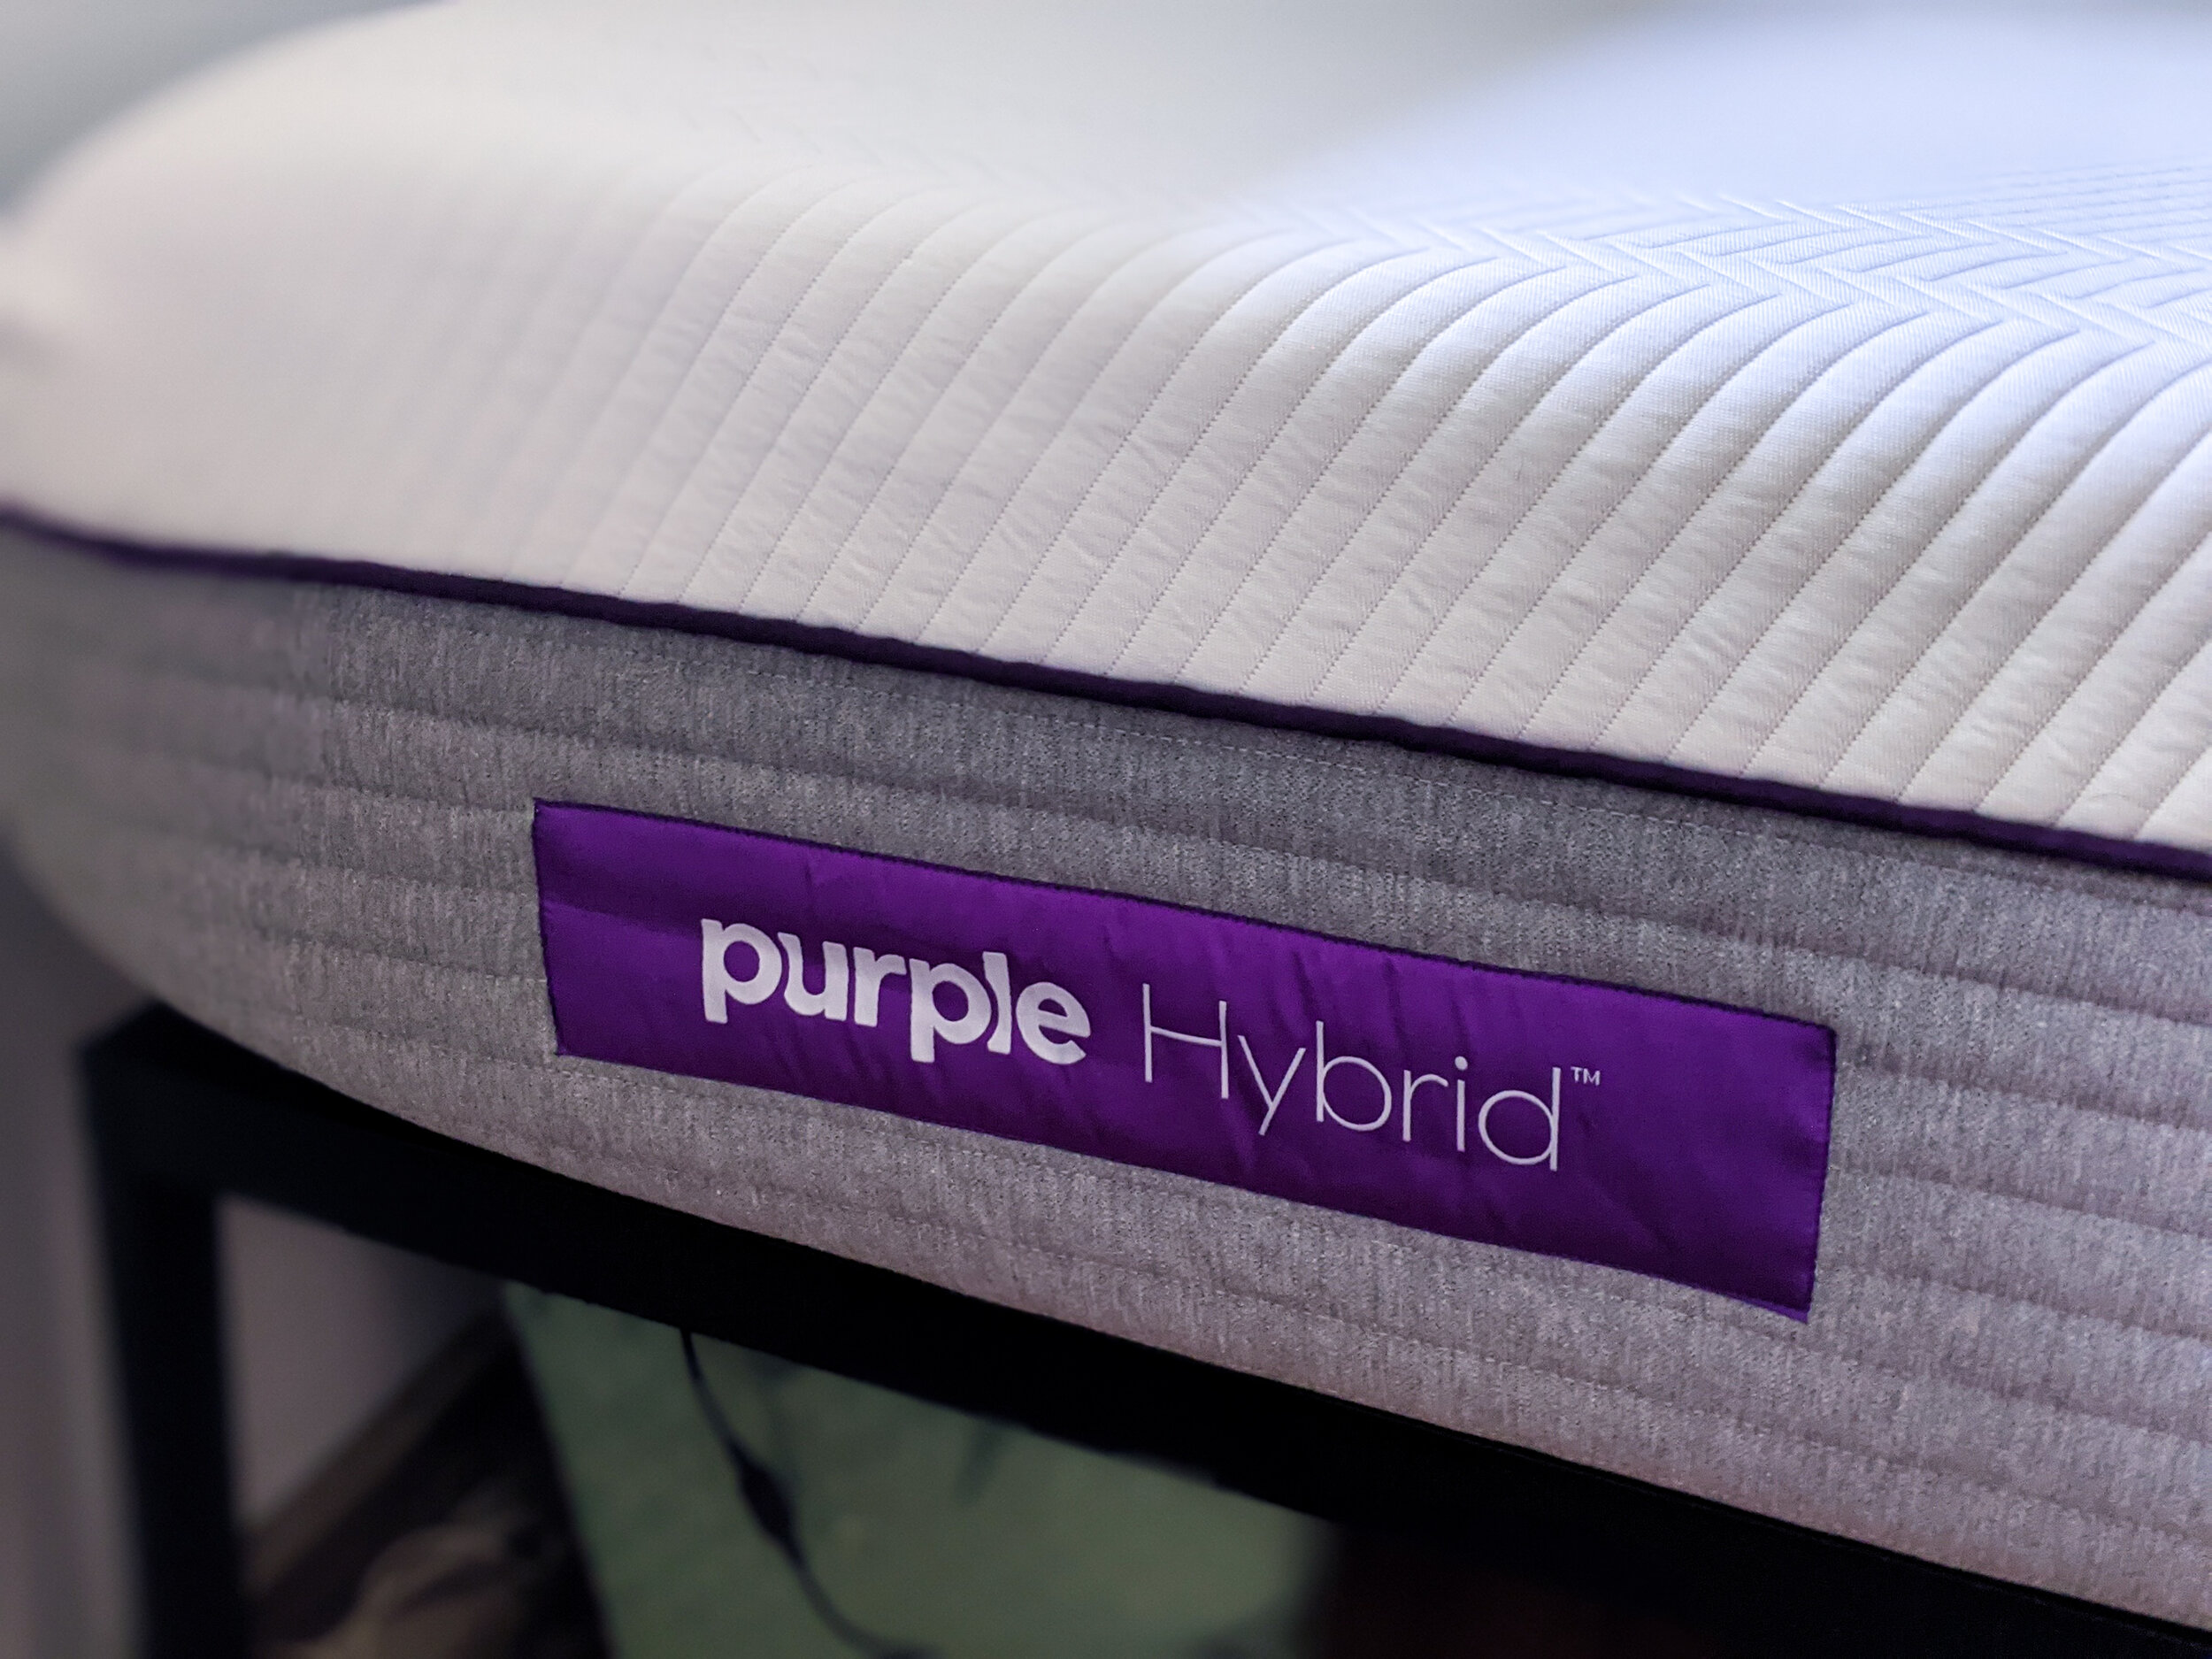 purple mattress on sale for black.friday